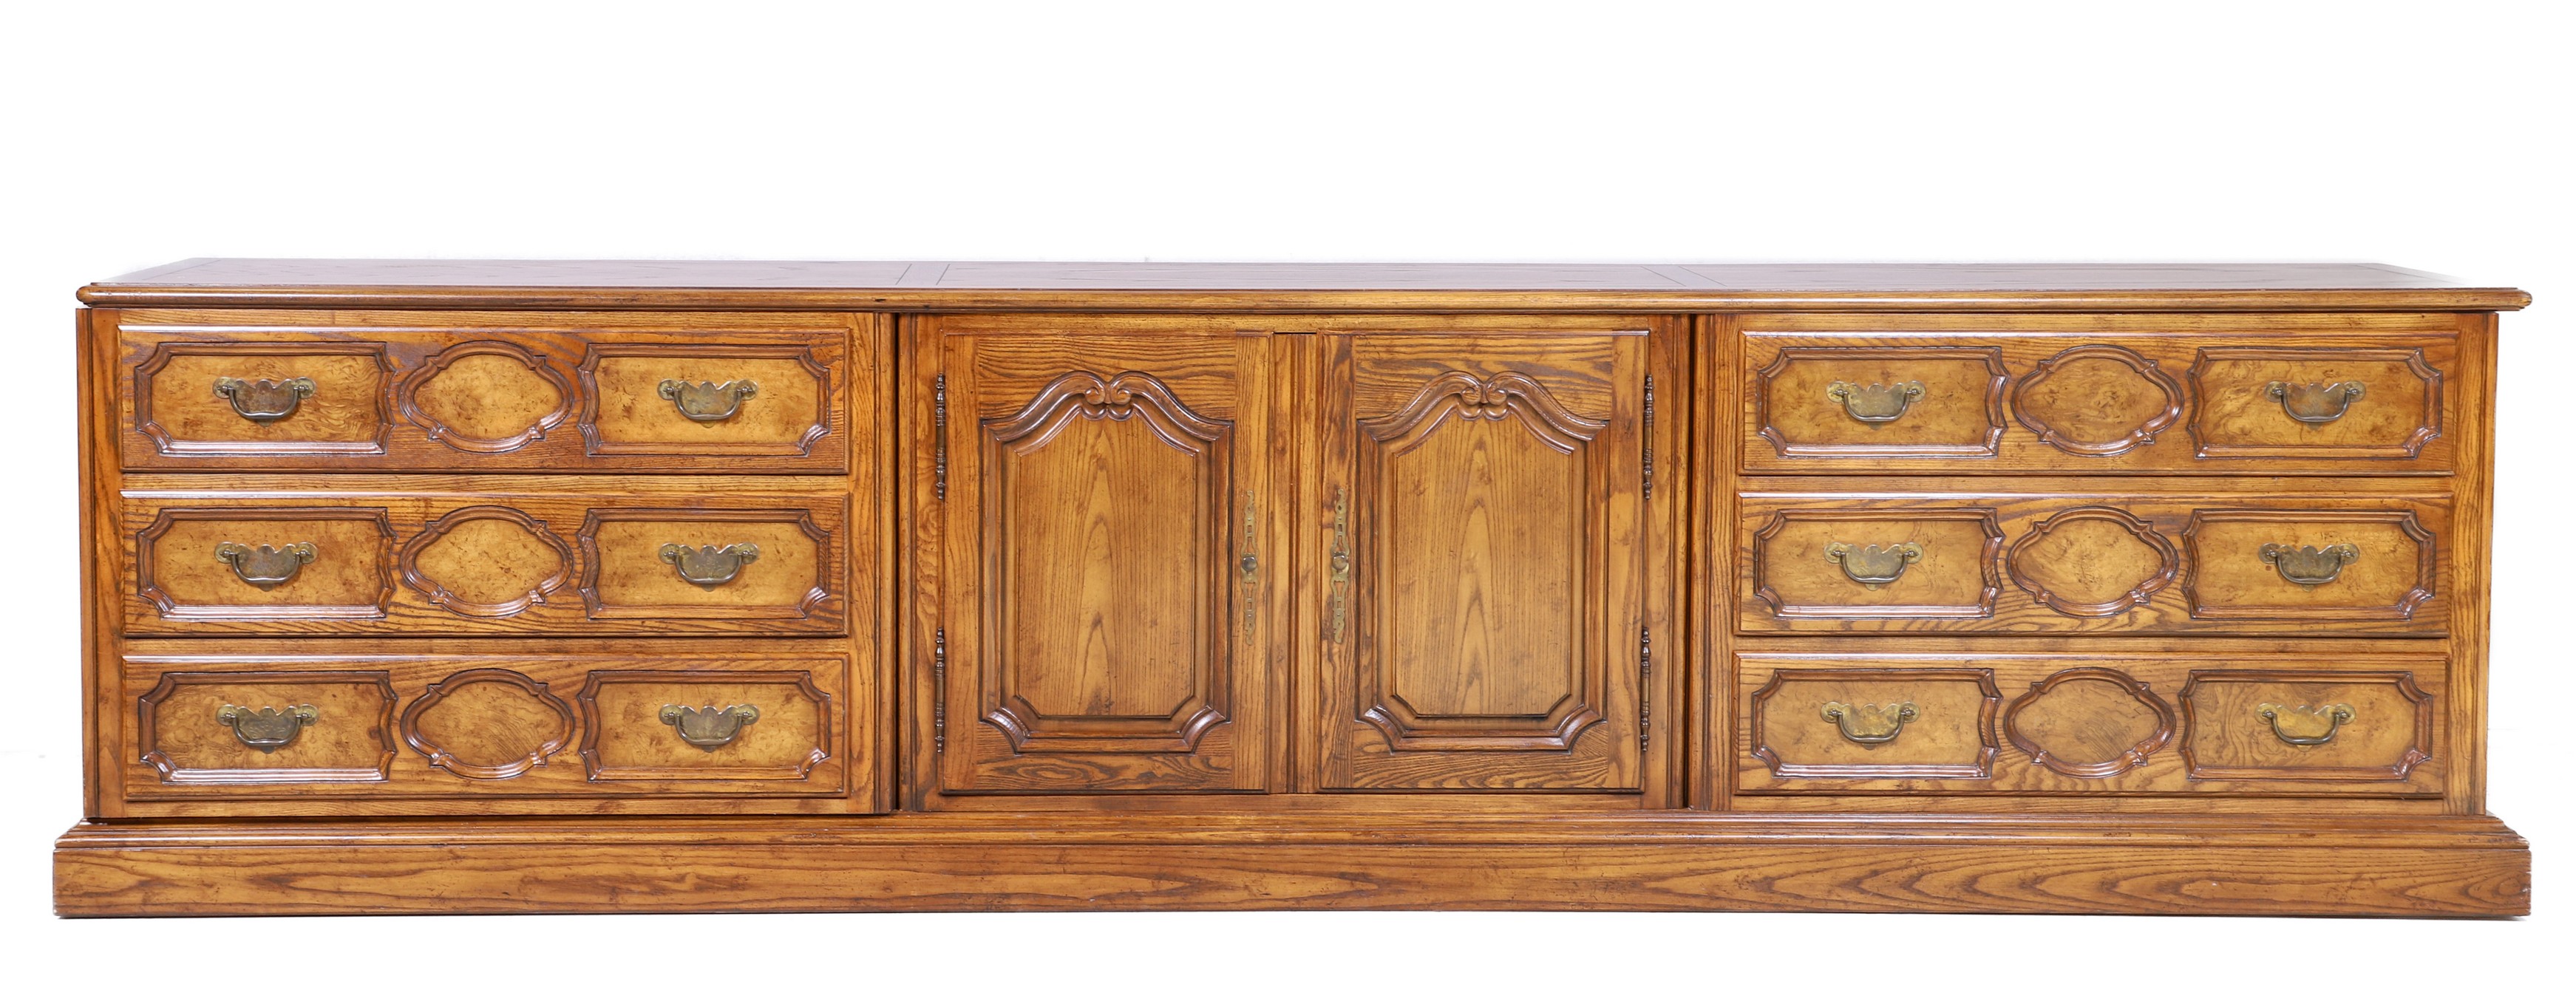 (5) part oak sideboard, center section